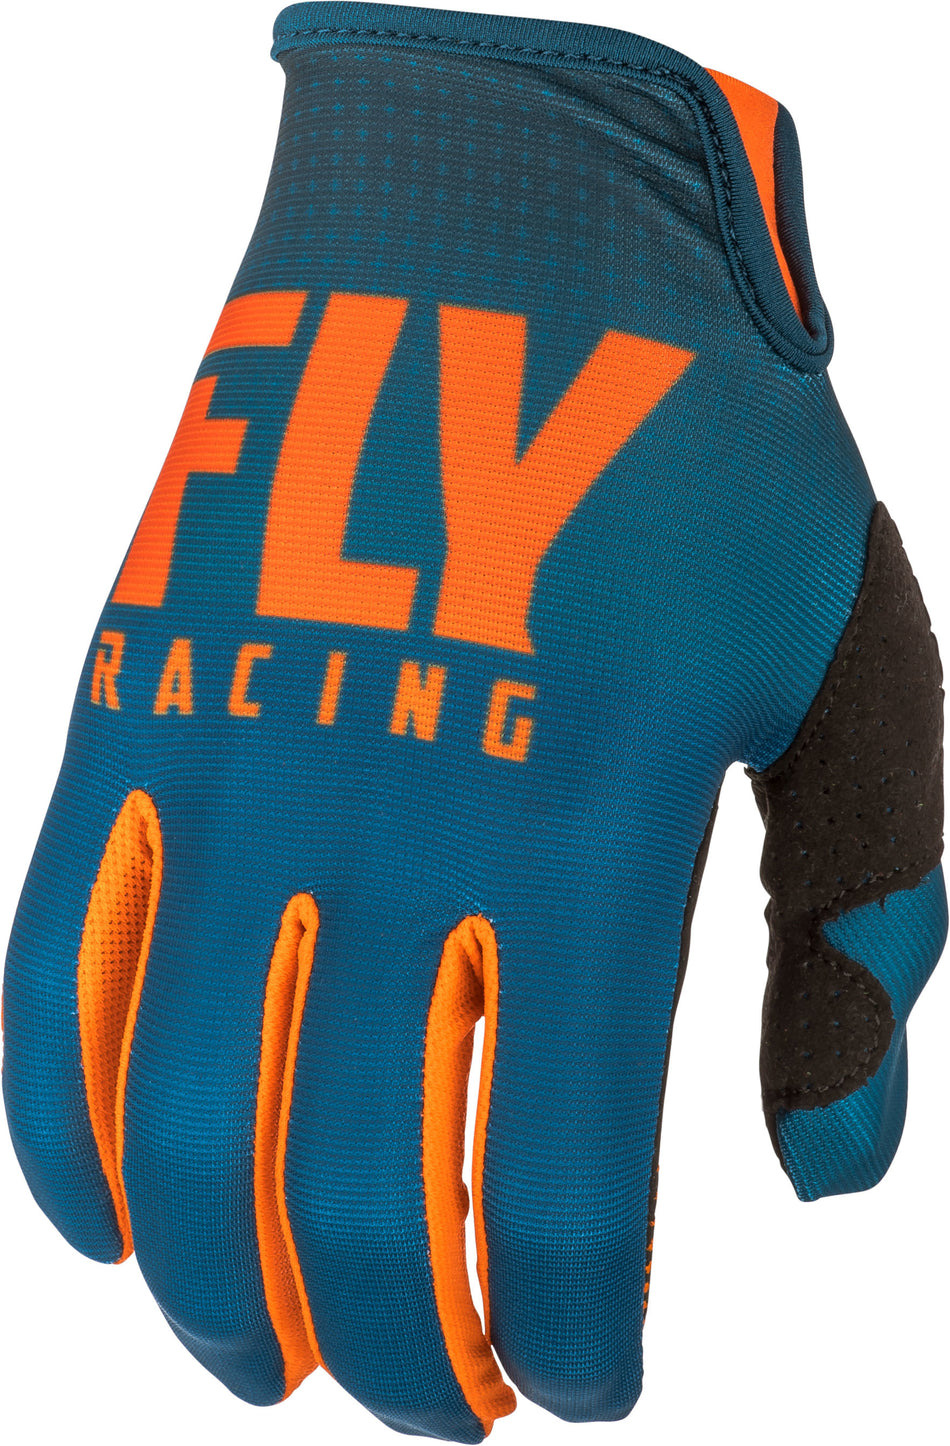 FLY RACING Lite Gloves Orange/Navy Sz 11 372-01611